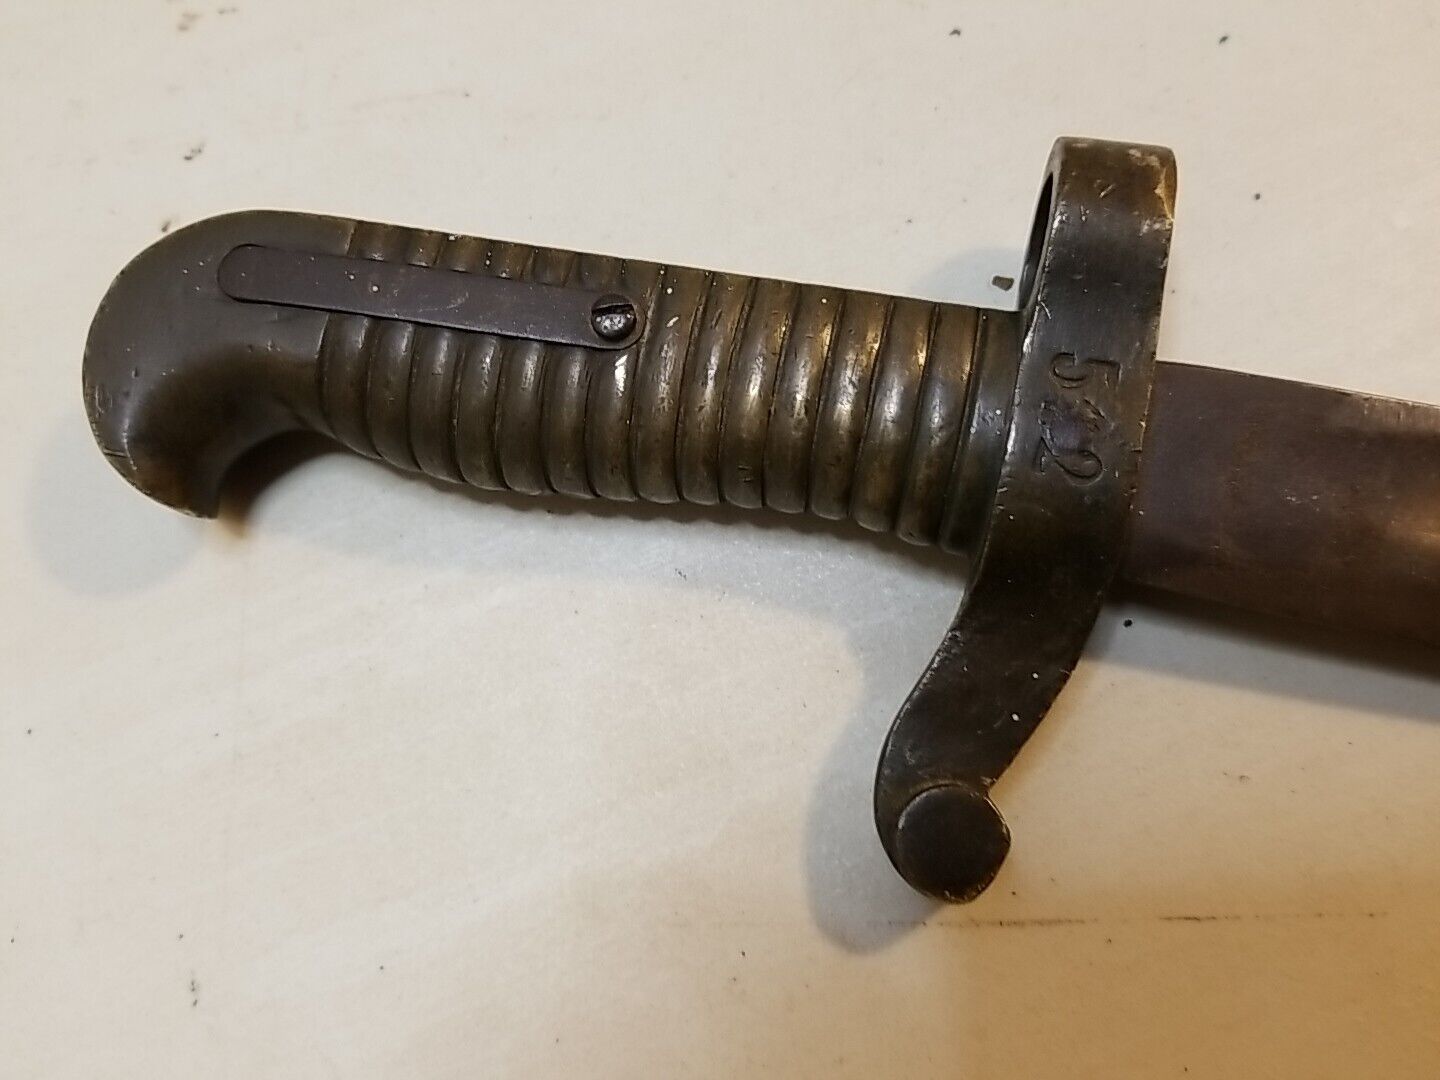 Civil War Saber Sword Bayonet - Possibly Confederate - Modified